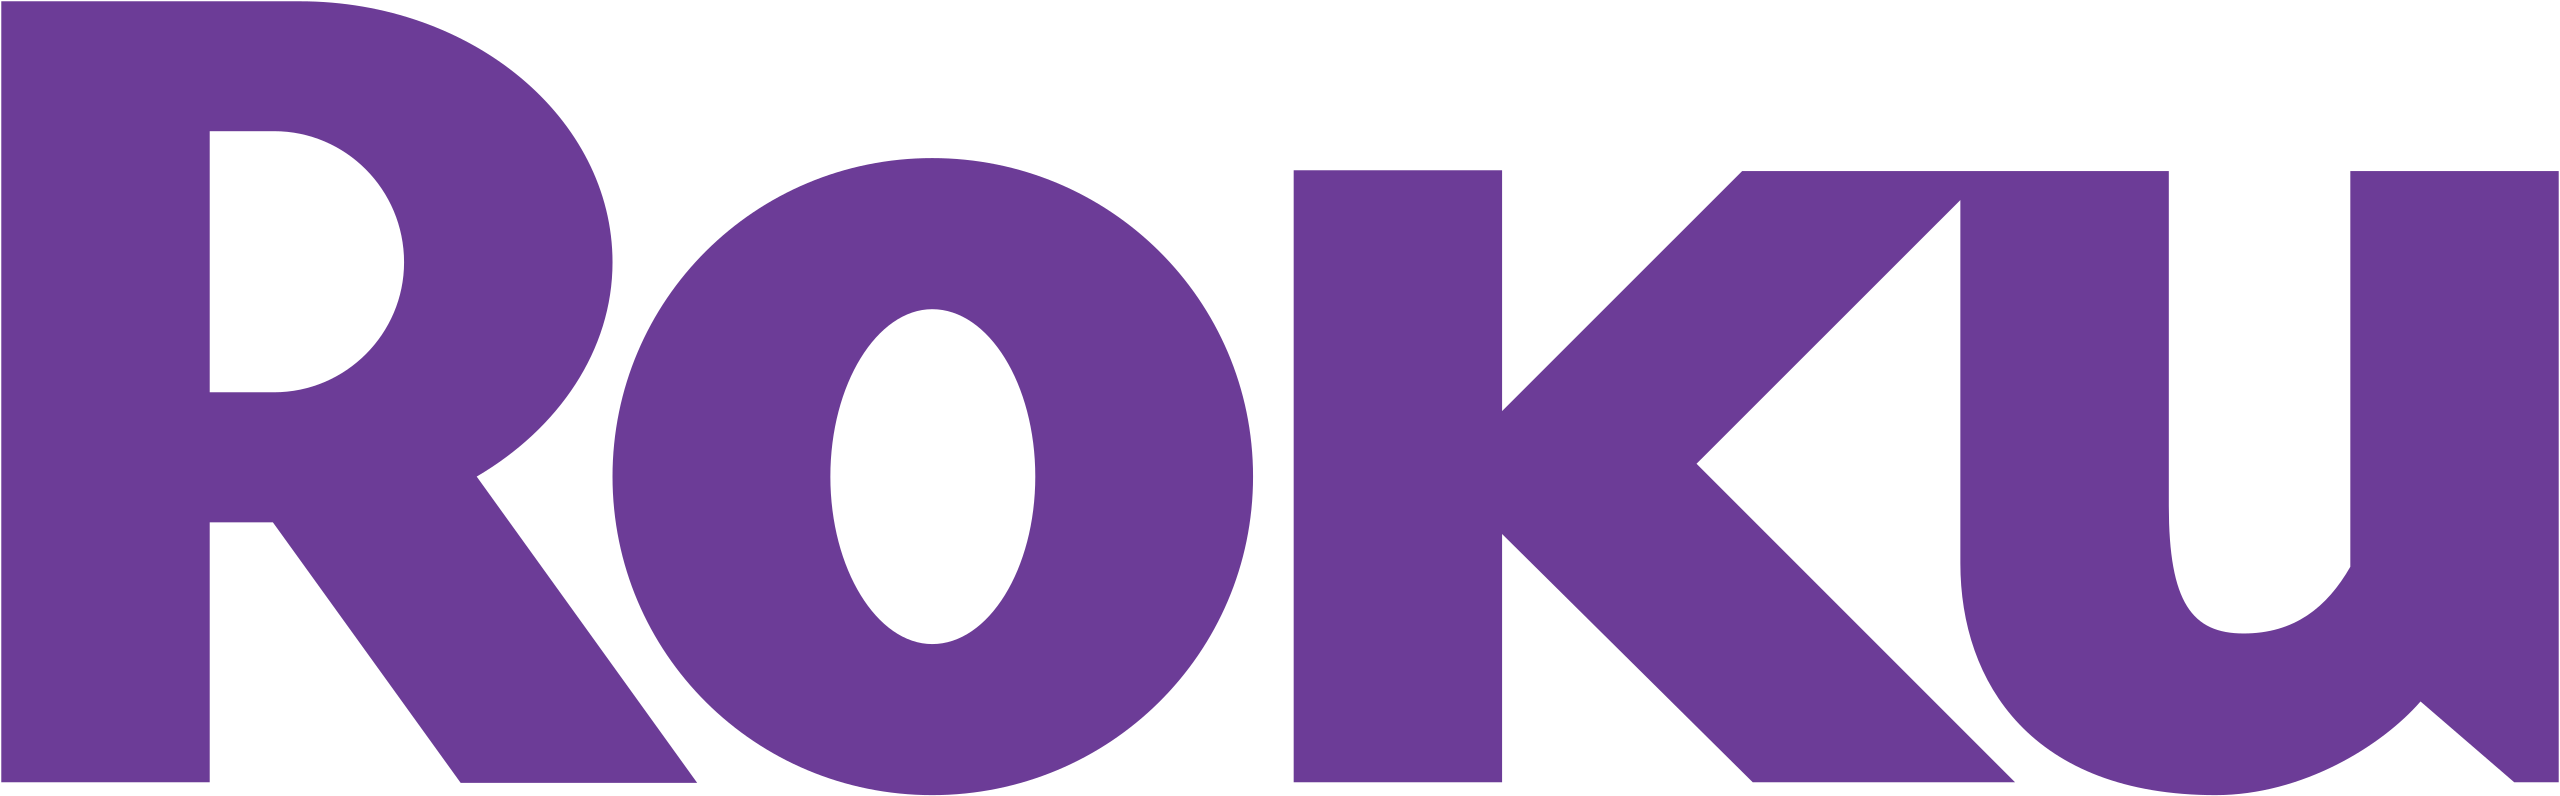 Roku Brand Logo